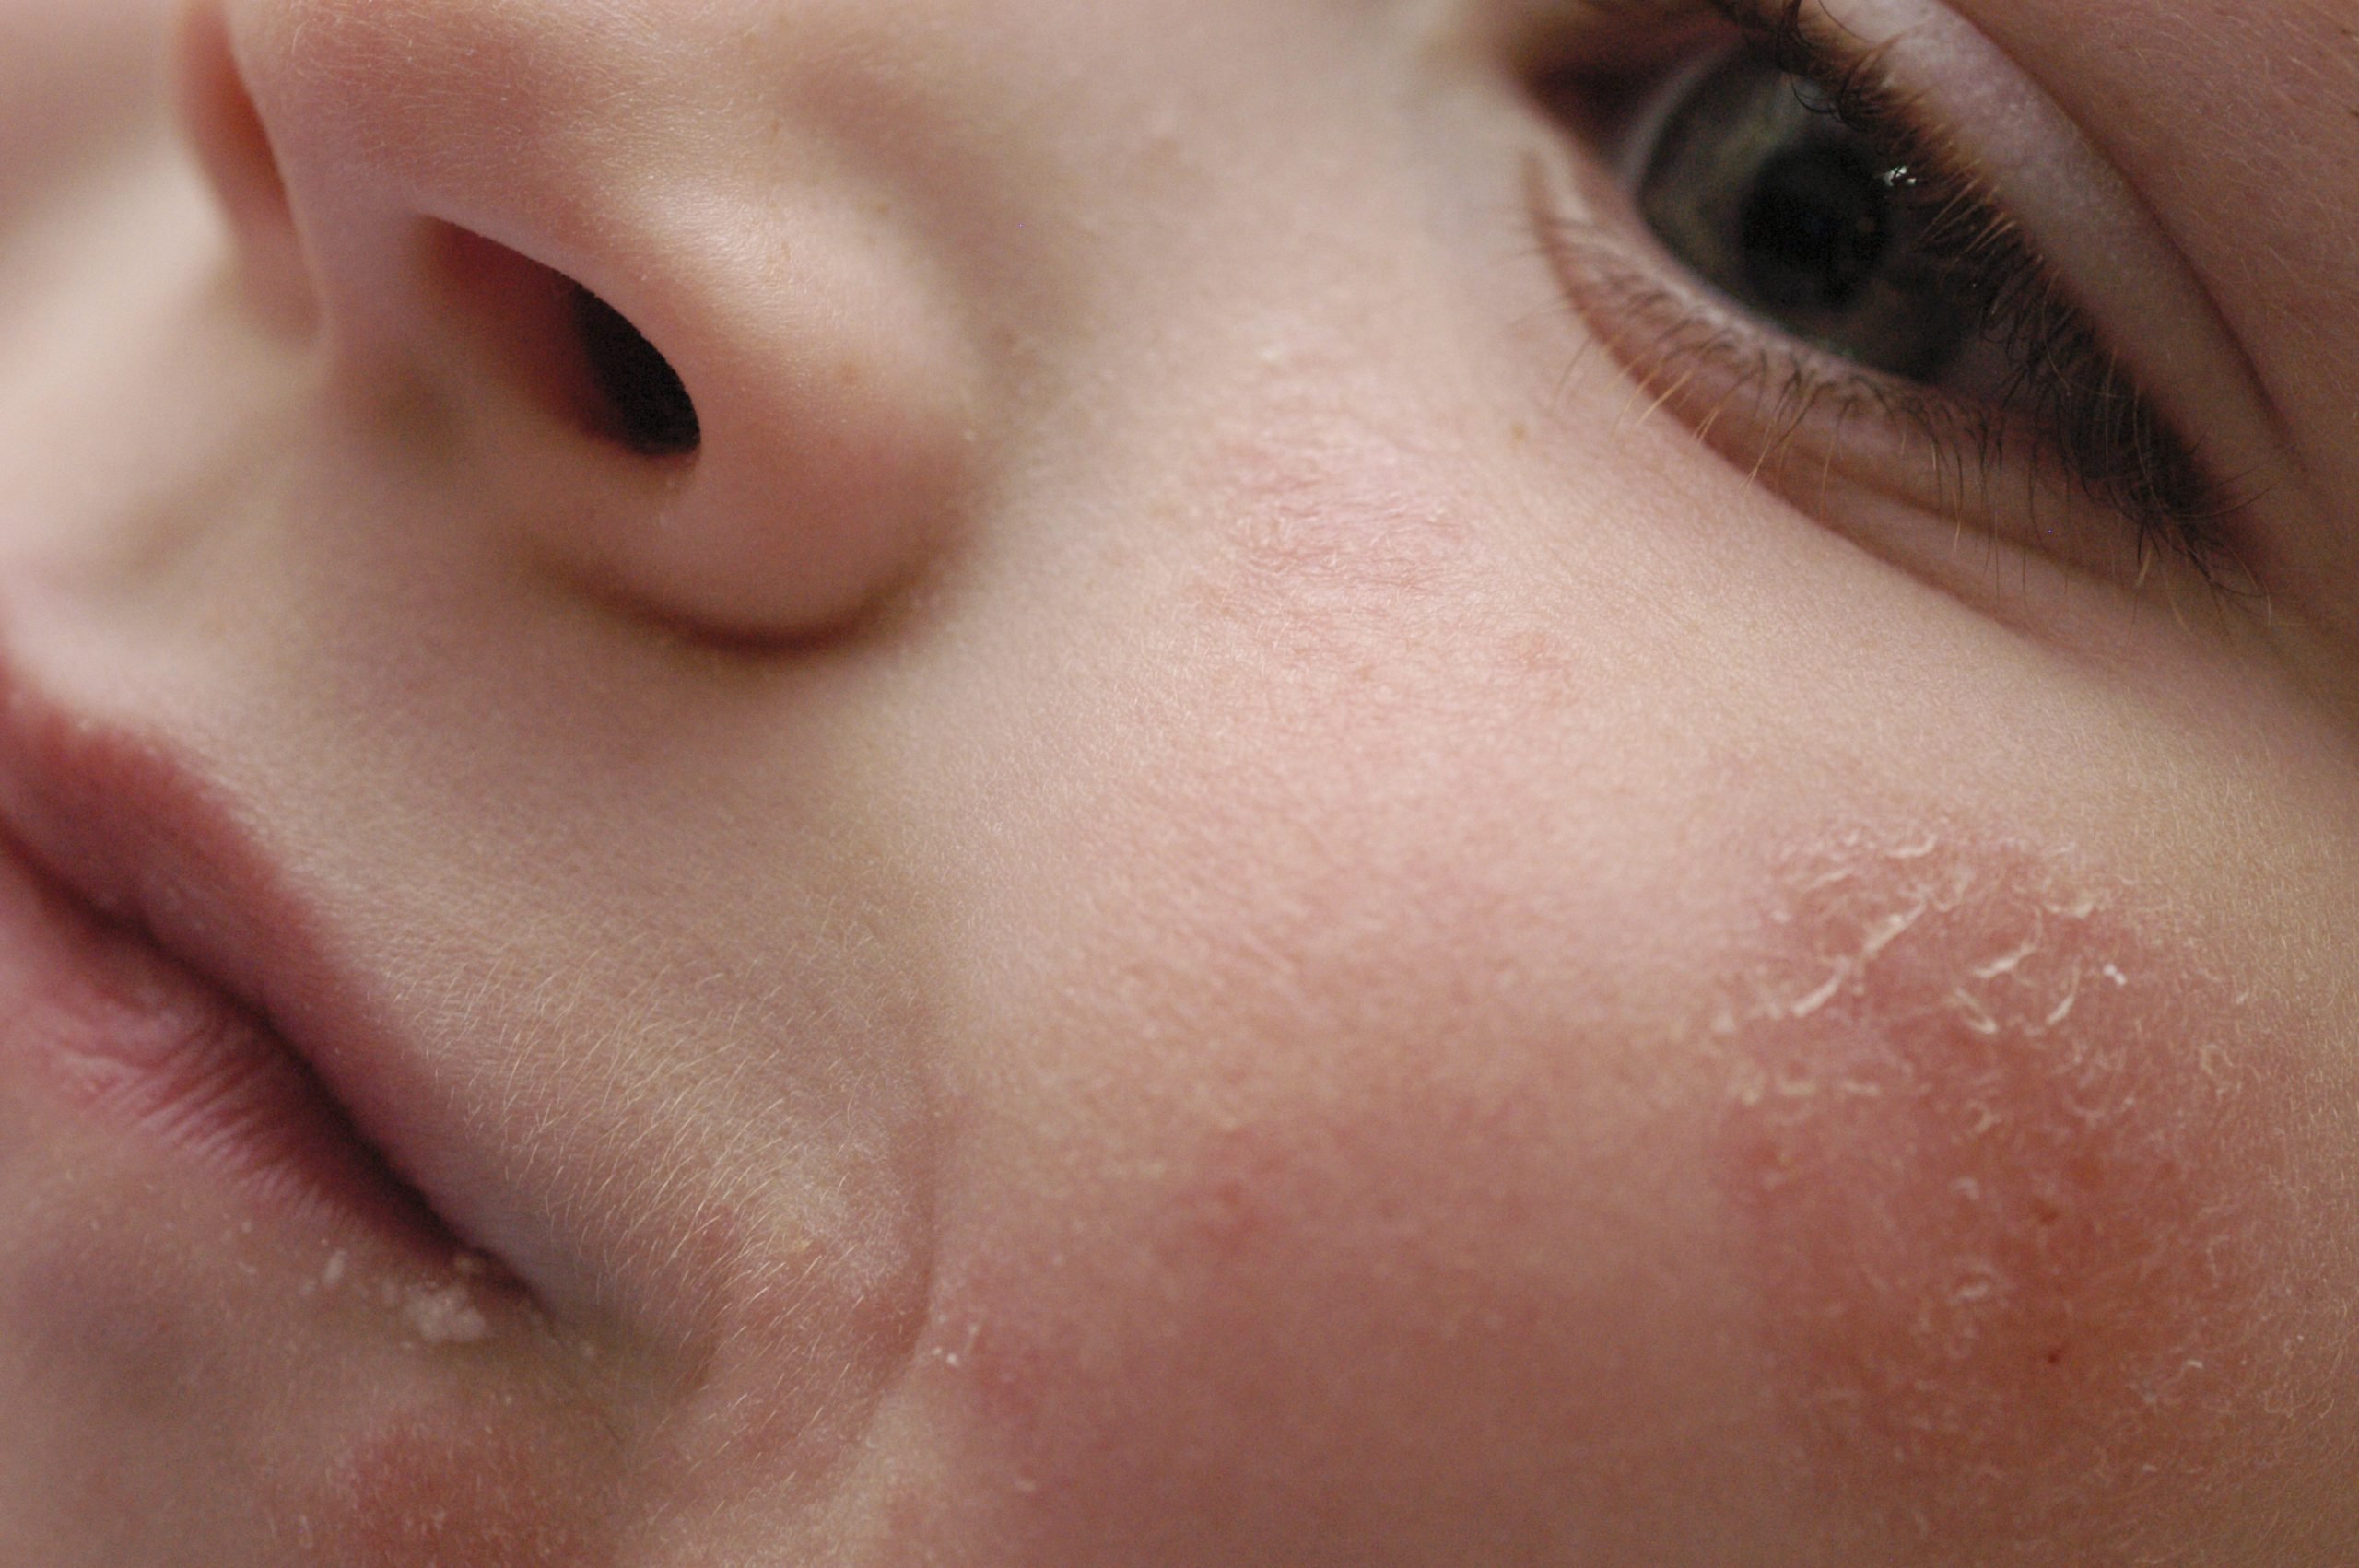 Facial Eczema Facts